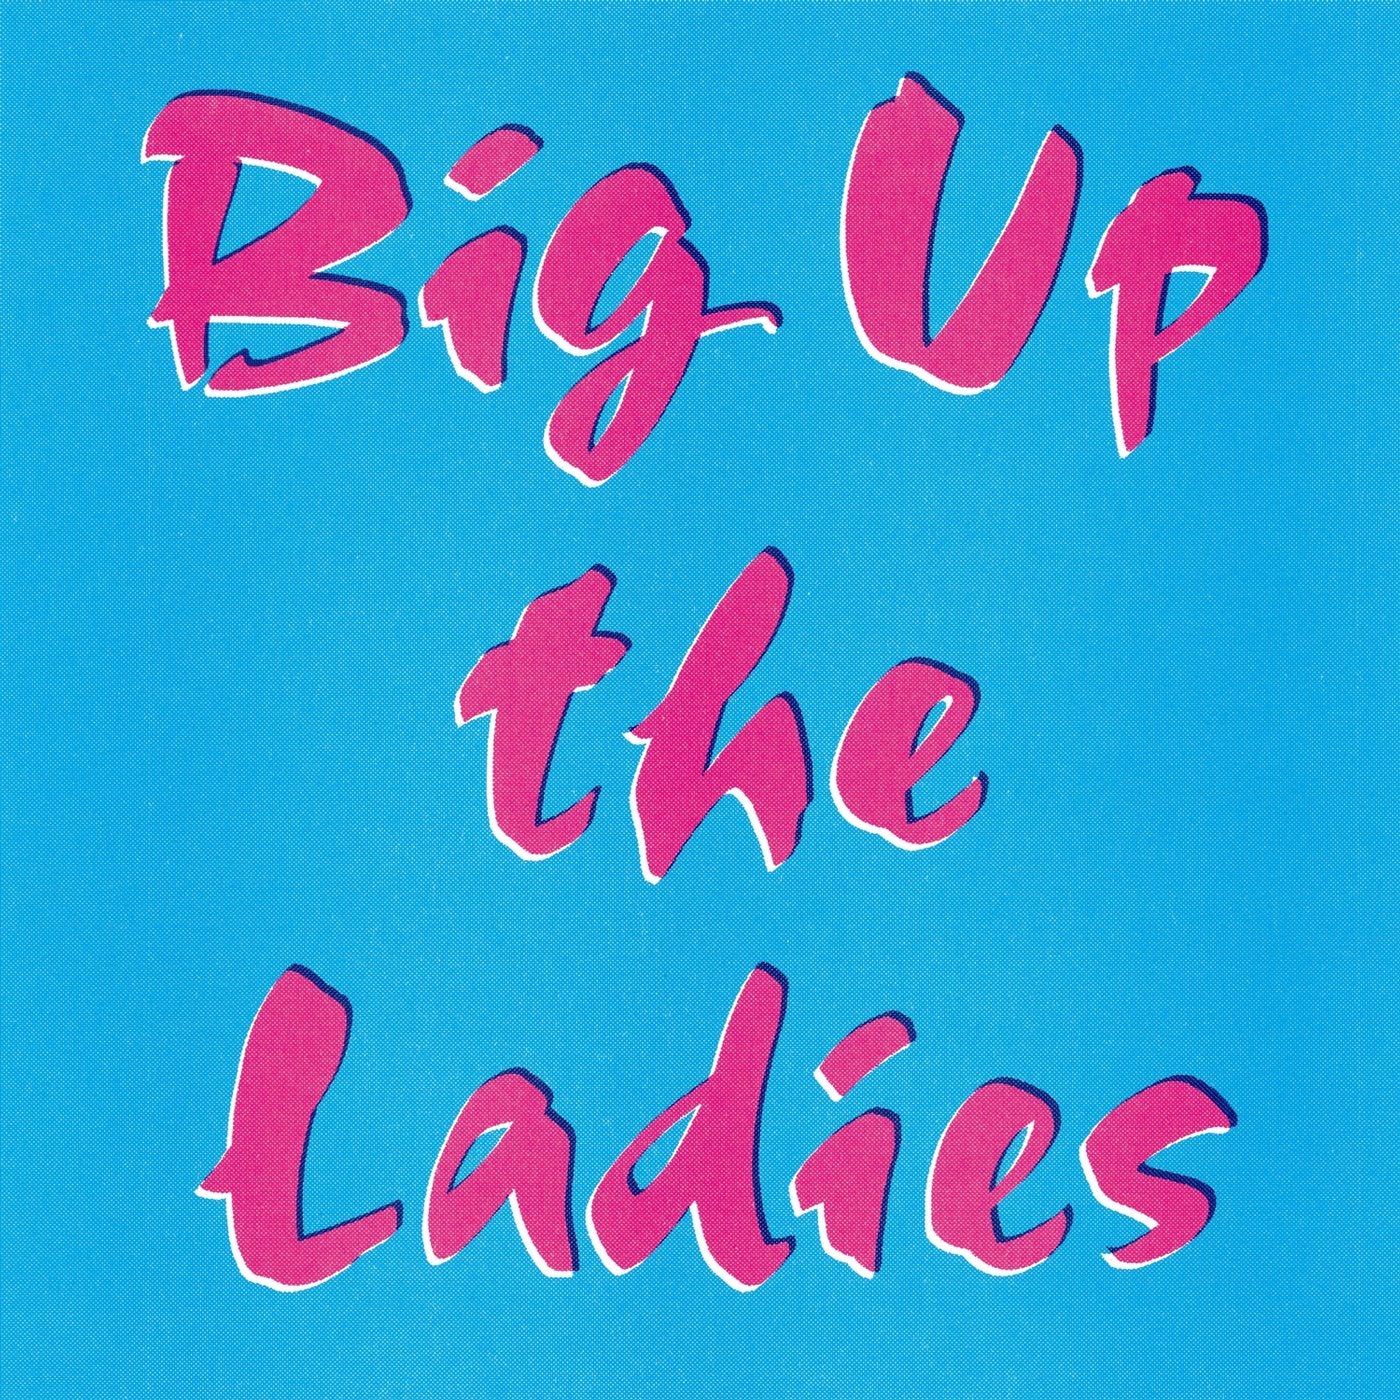 Big up the Ladies